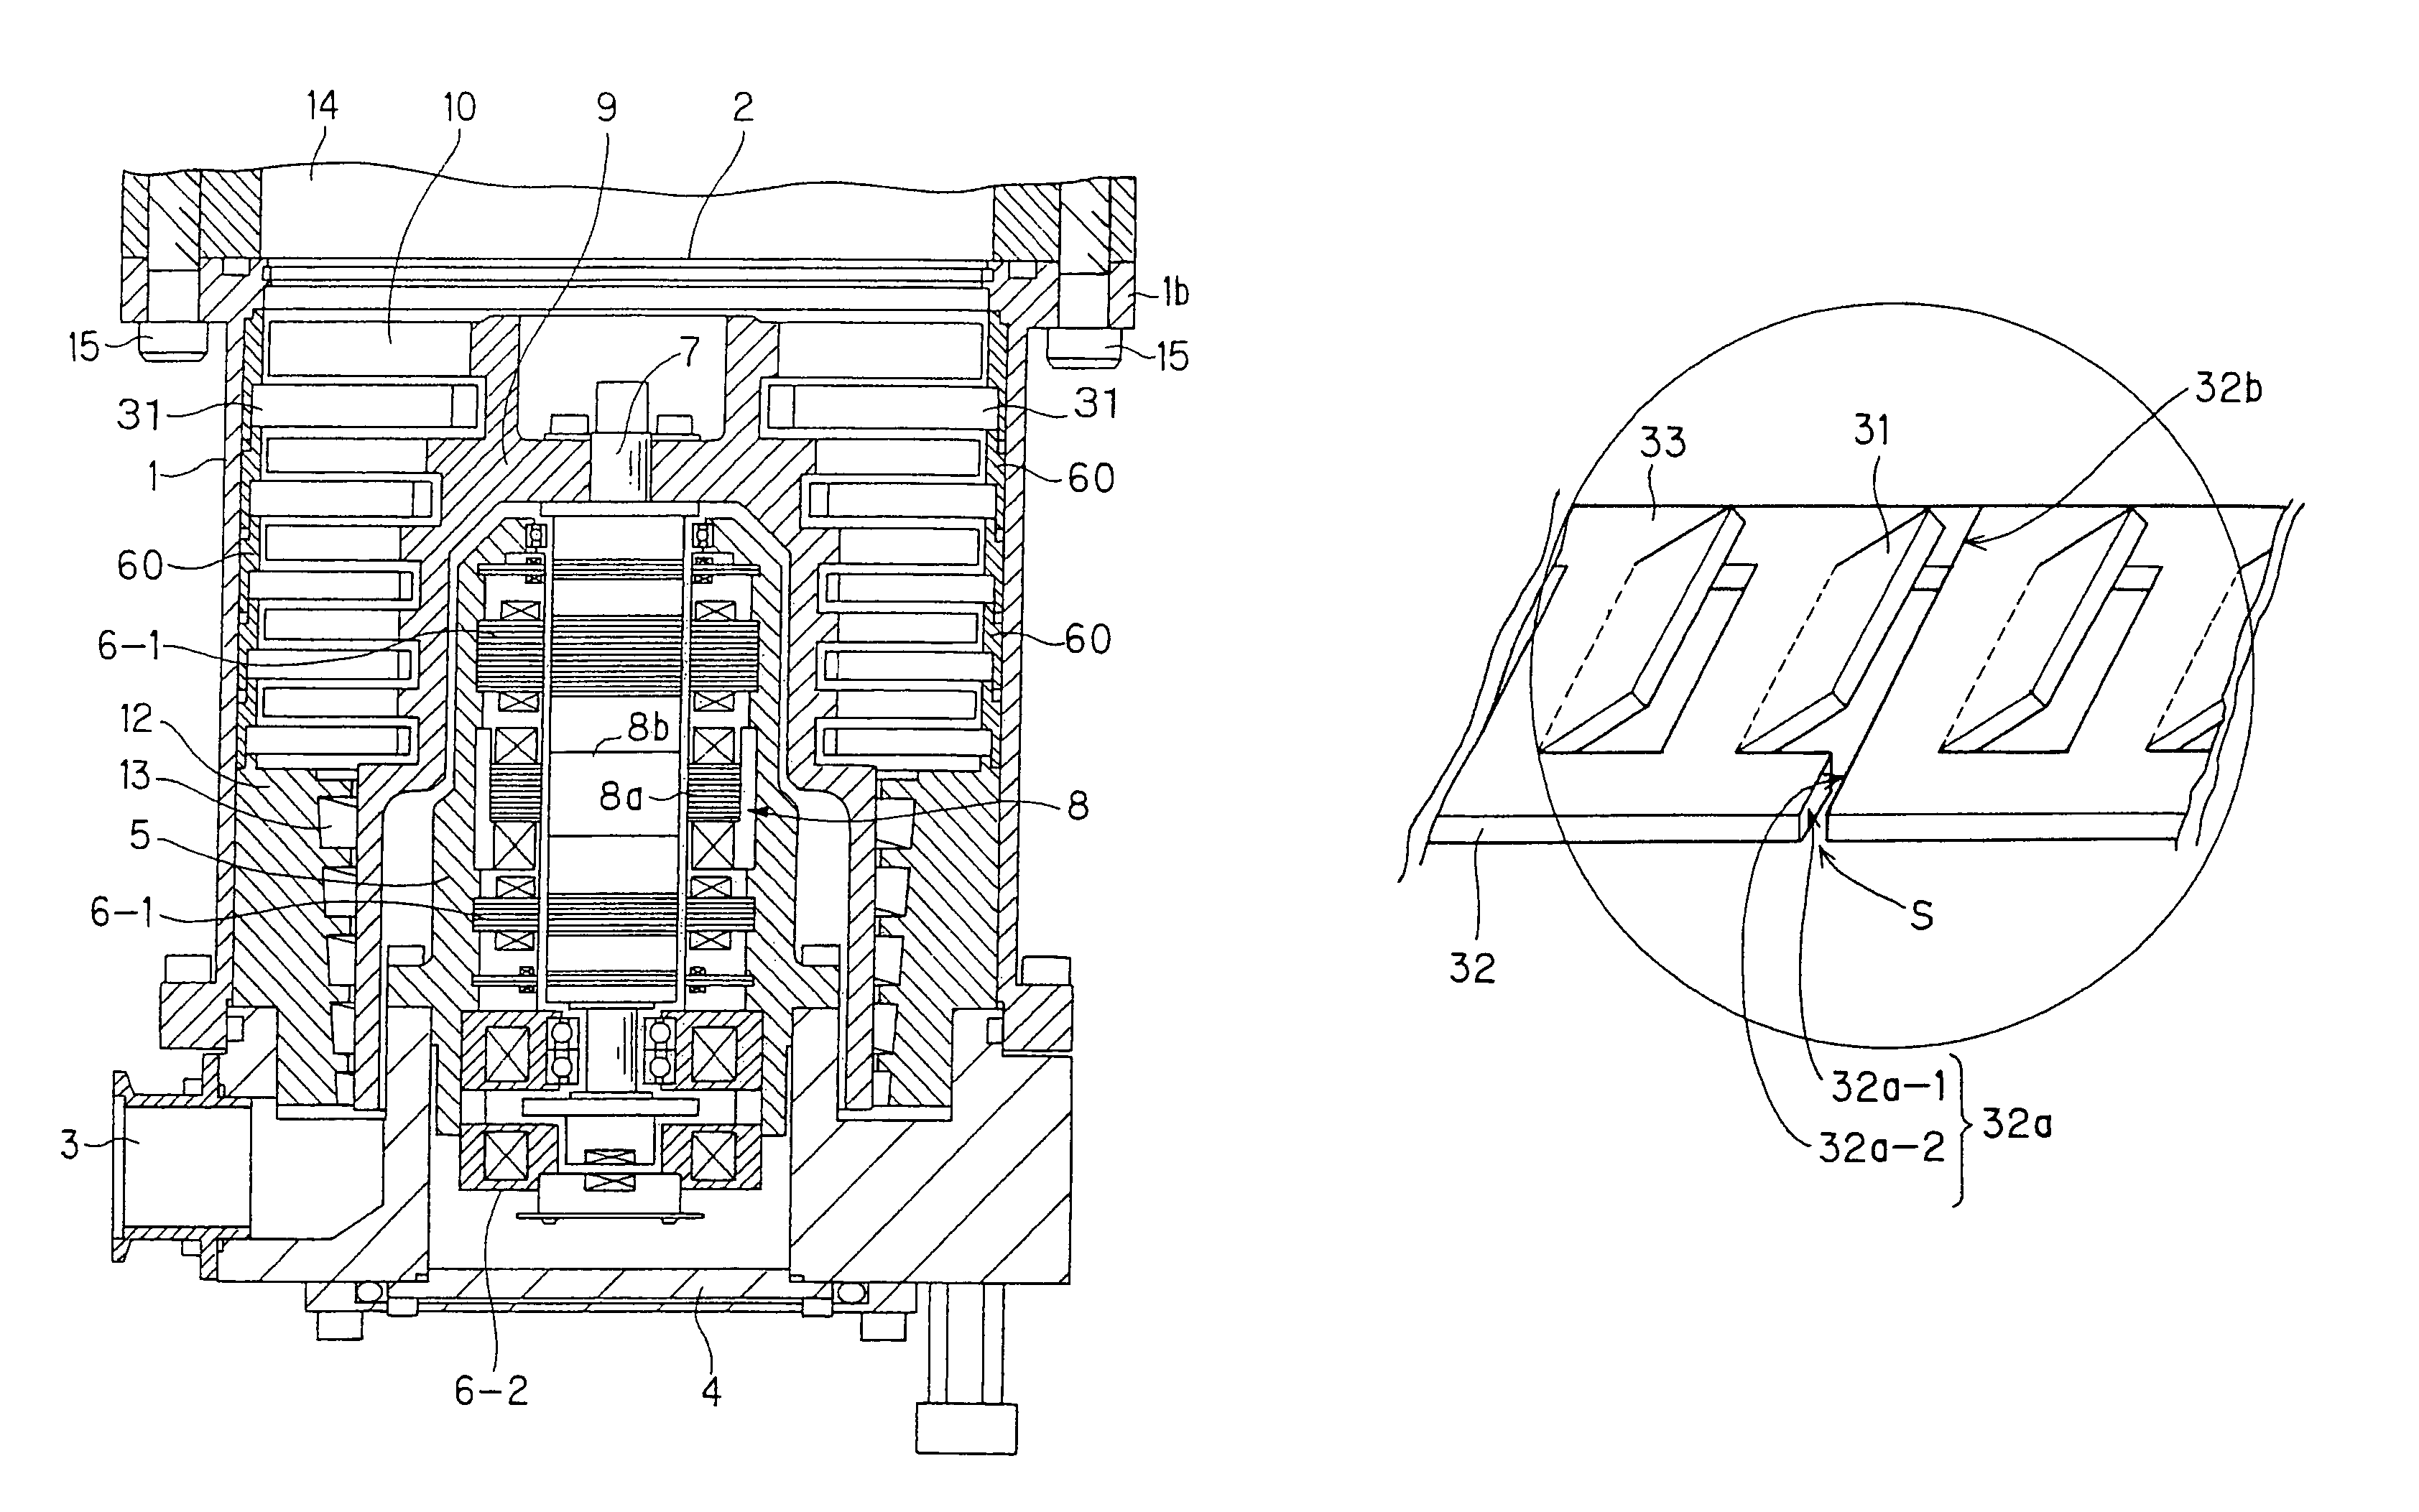 Stator vane of turbo molecular pump